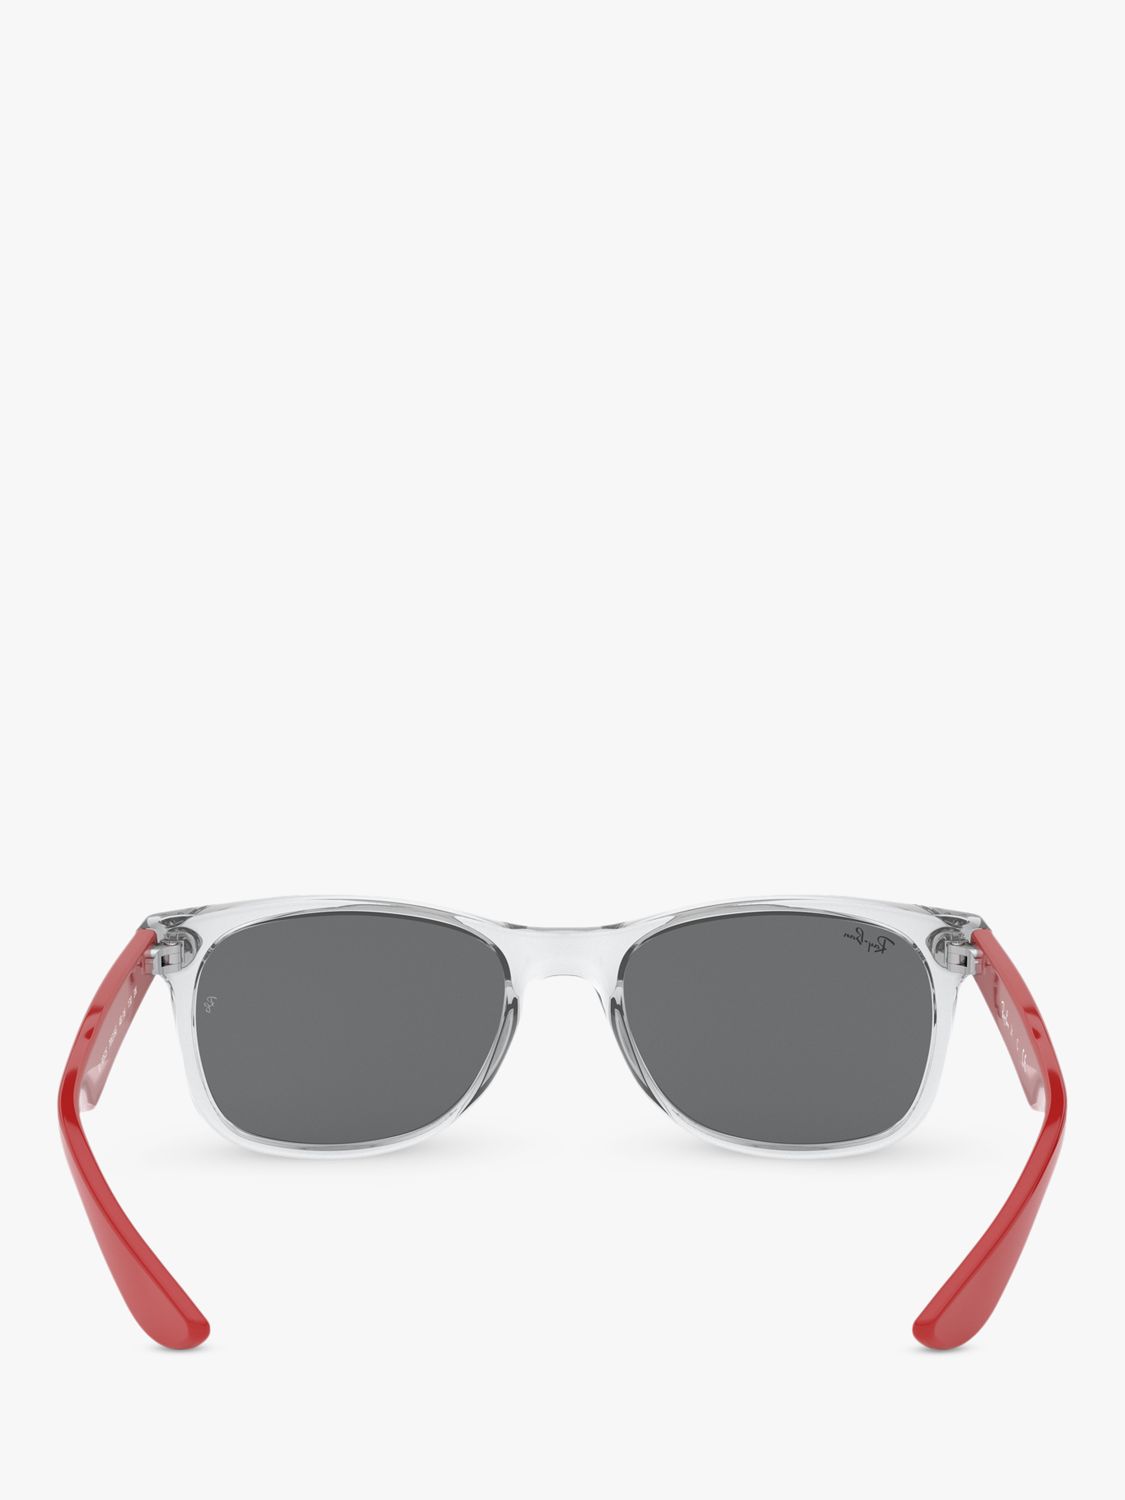 Buy Ray-Ban RJ9052S Kids' Unisex Square Sunglasses, Transparent Grey/Mirror Grey Online at johnlewis.com